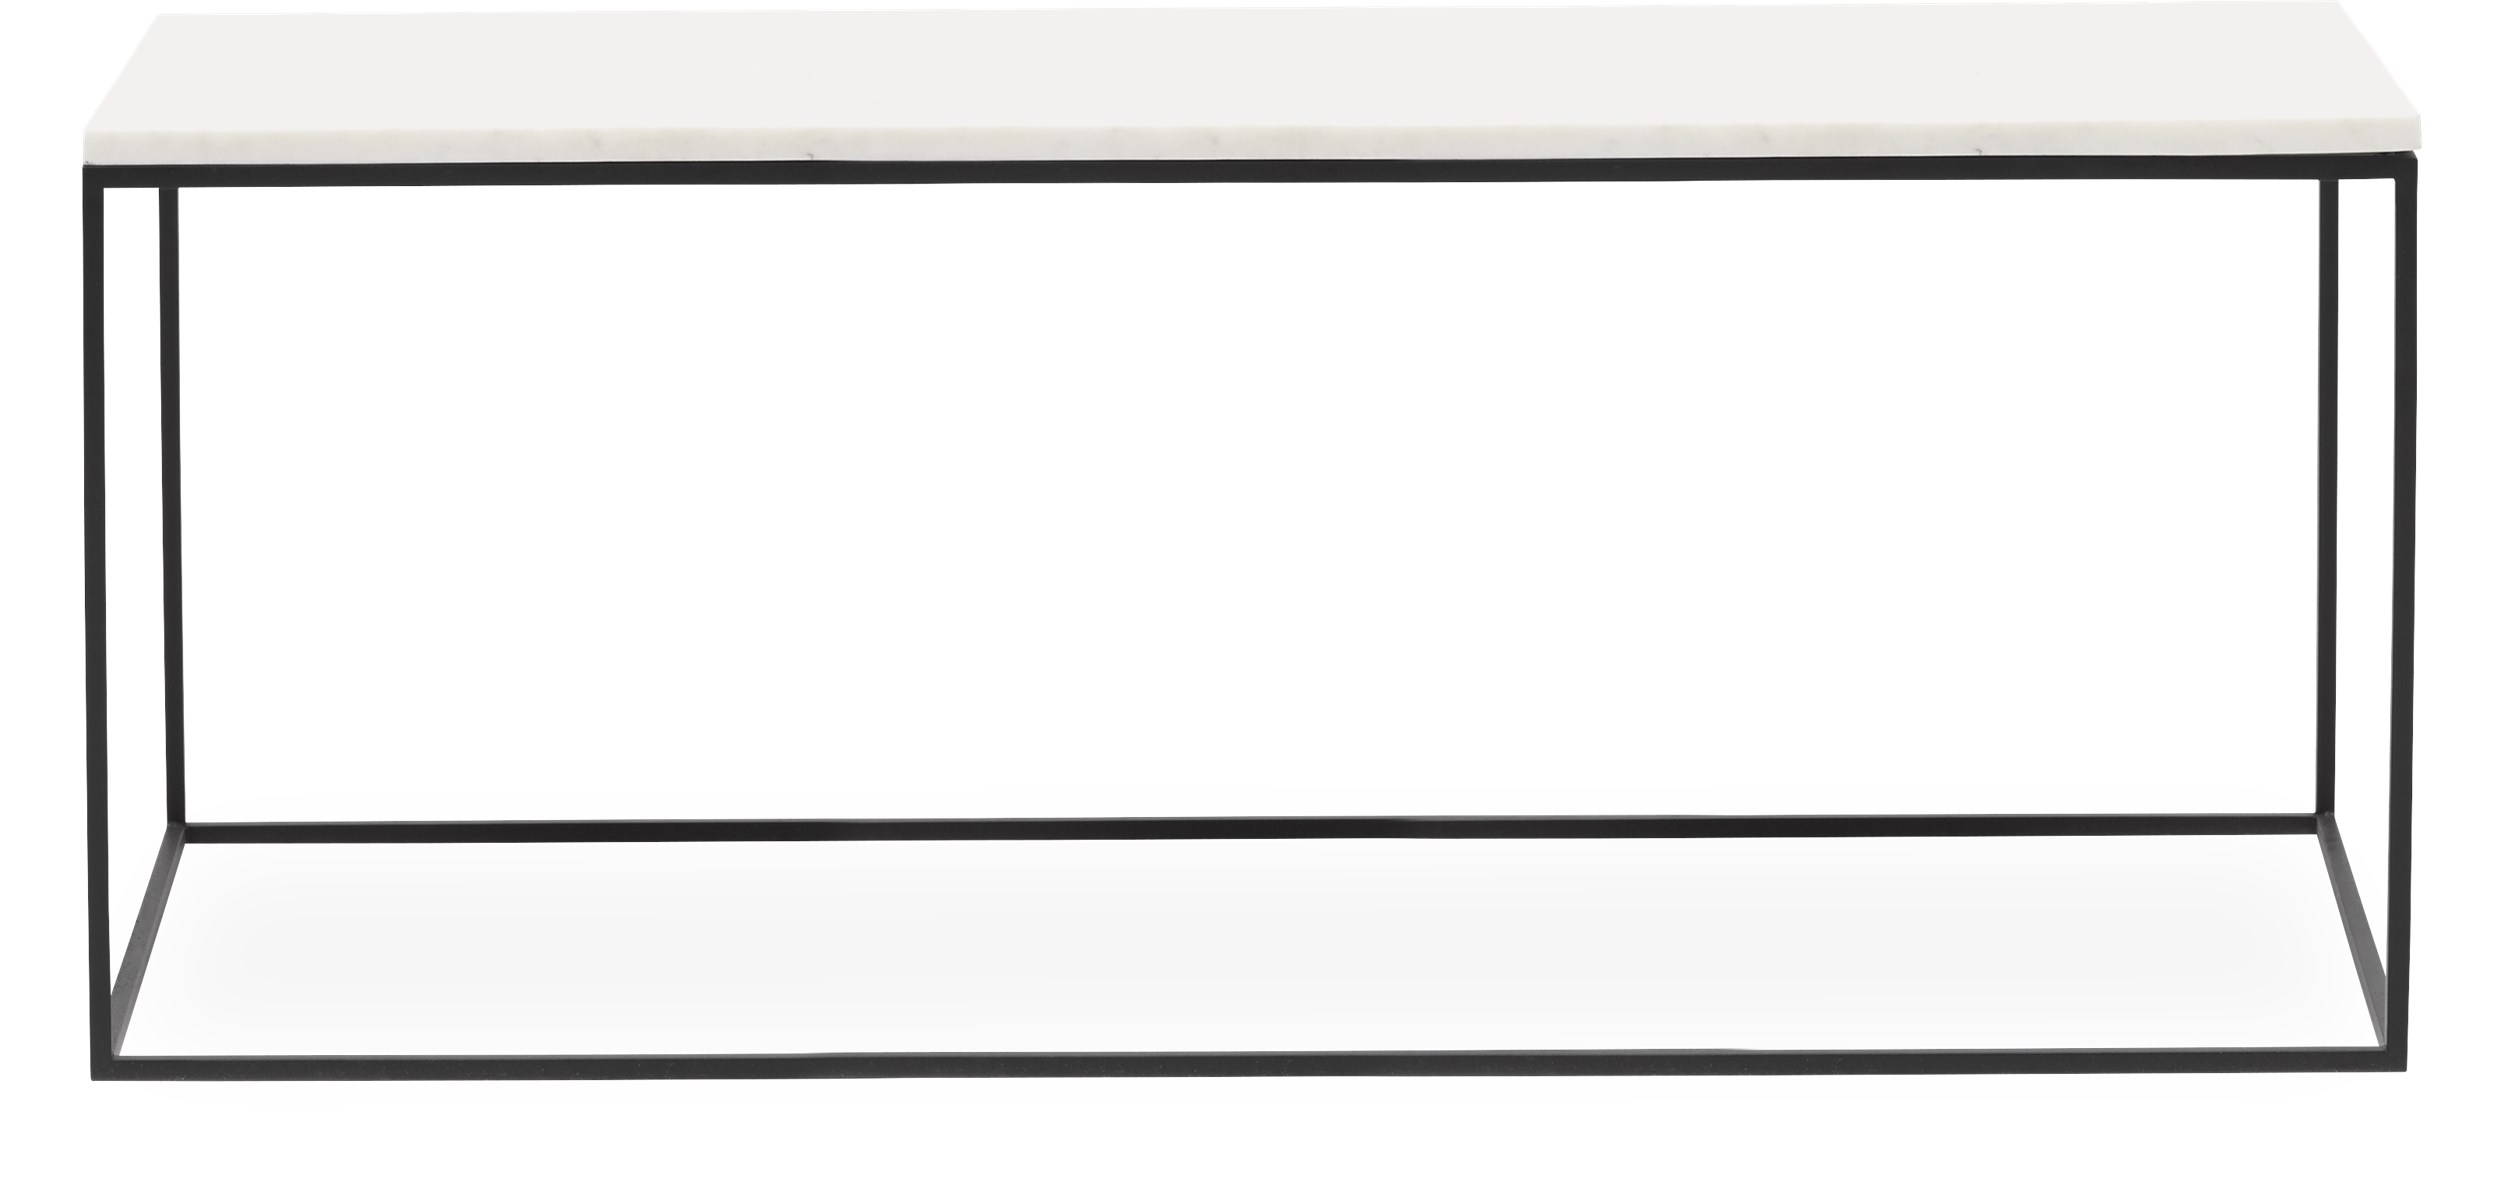 Square Soffbord 100 x 41,6 x 50 cm - Bordsskiva i vit marmor och stomme i svartlackerad metall